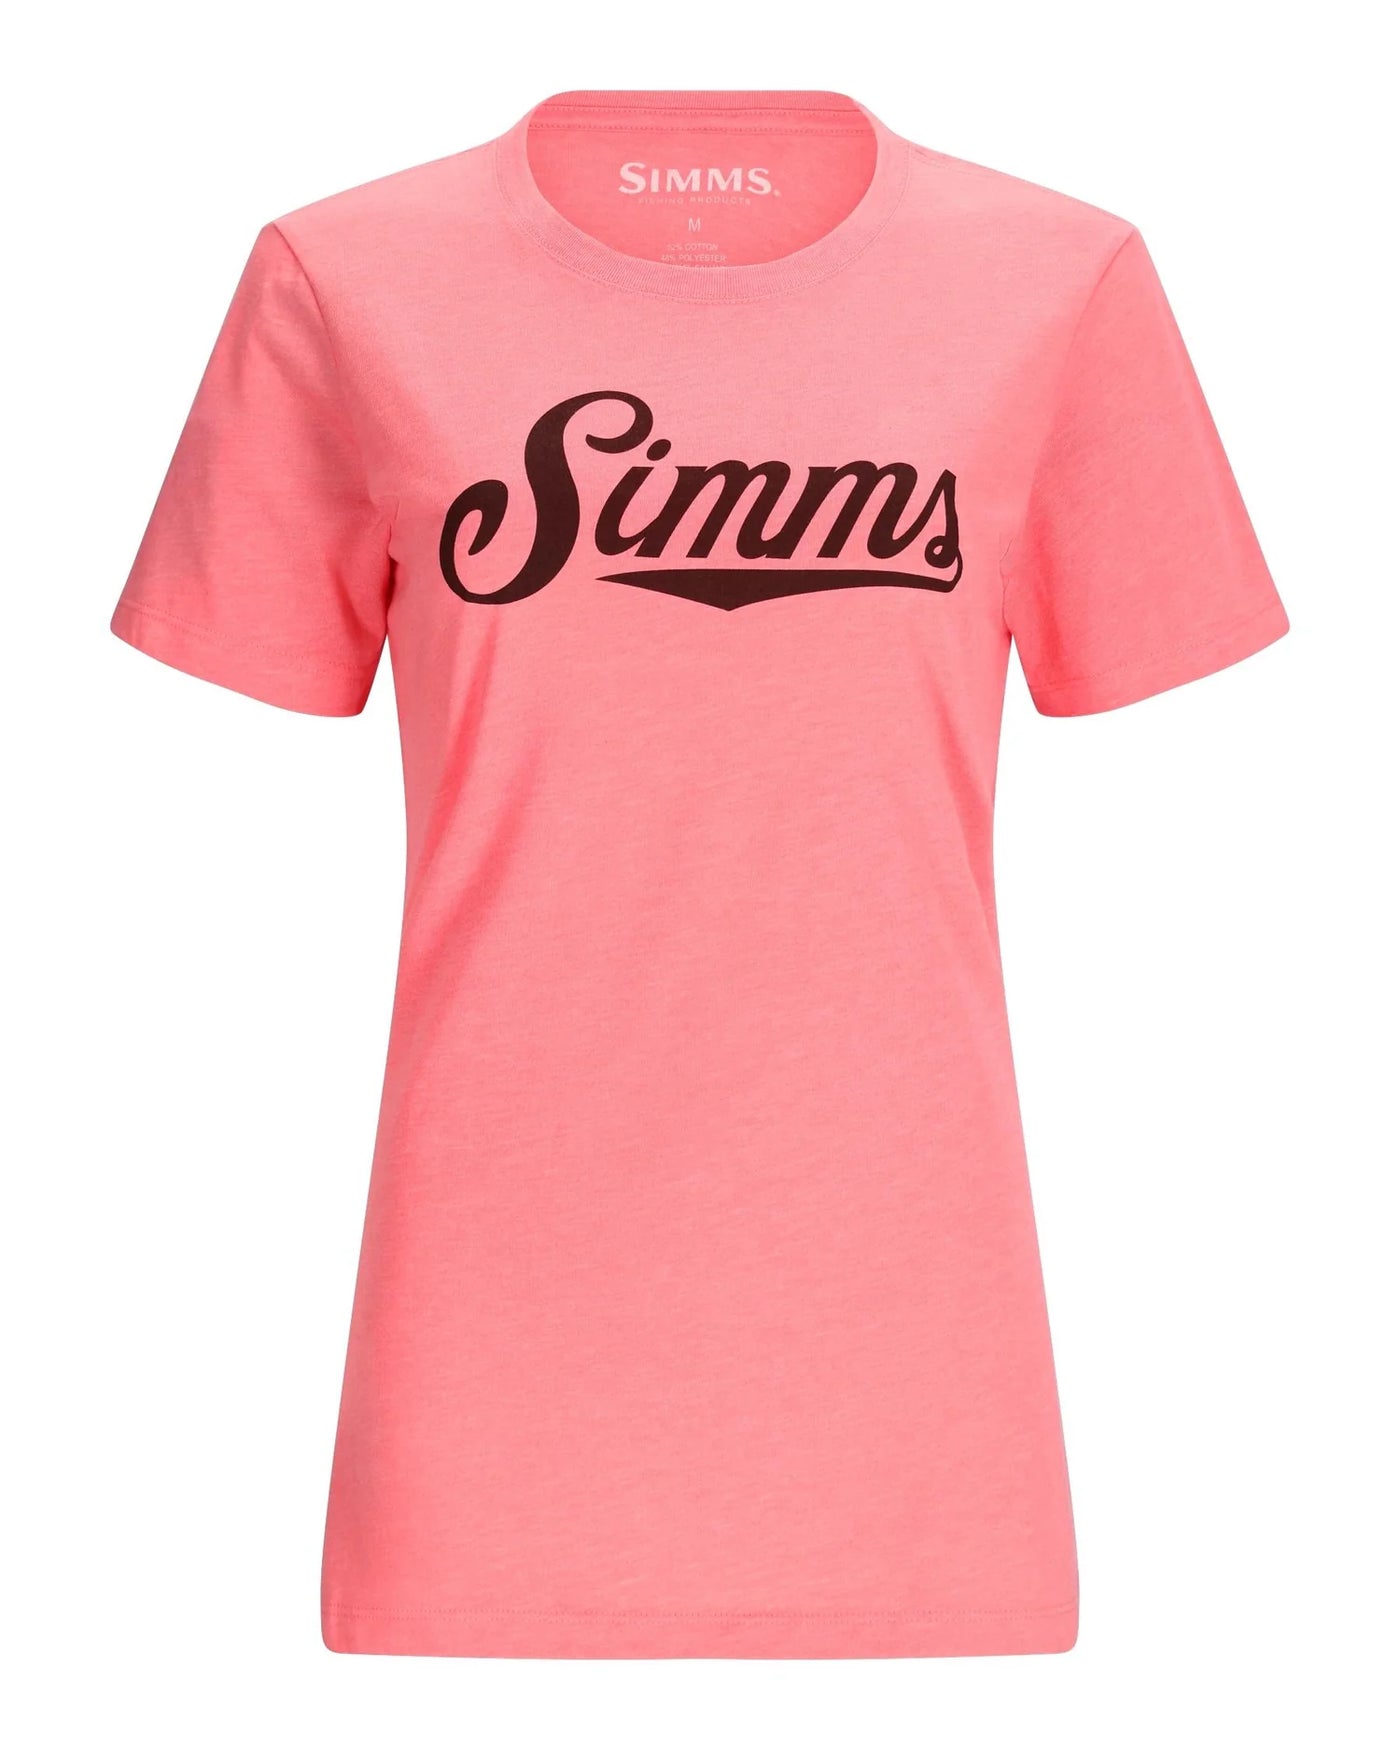 Simms Ws Creww Logo T-Shirt